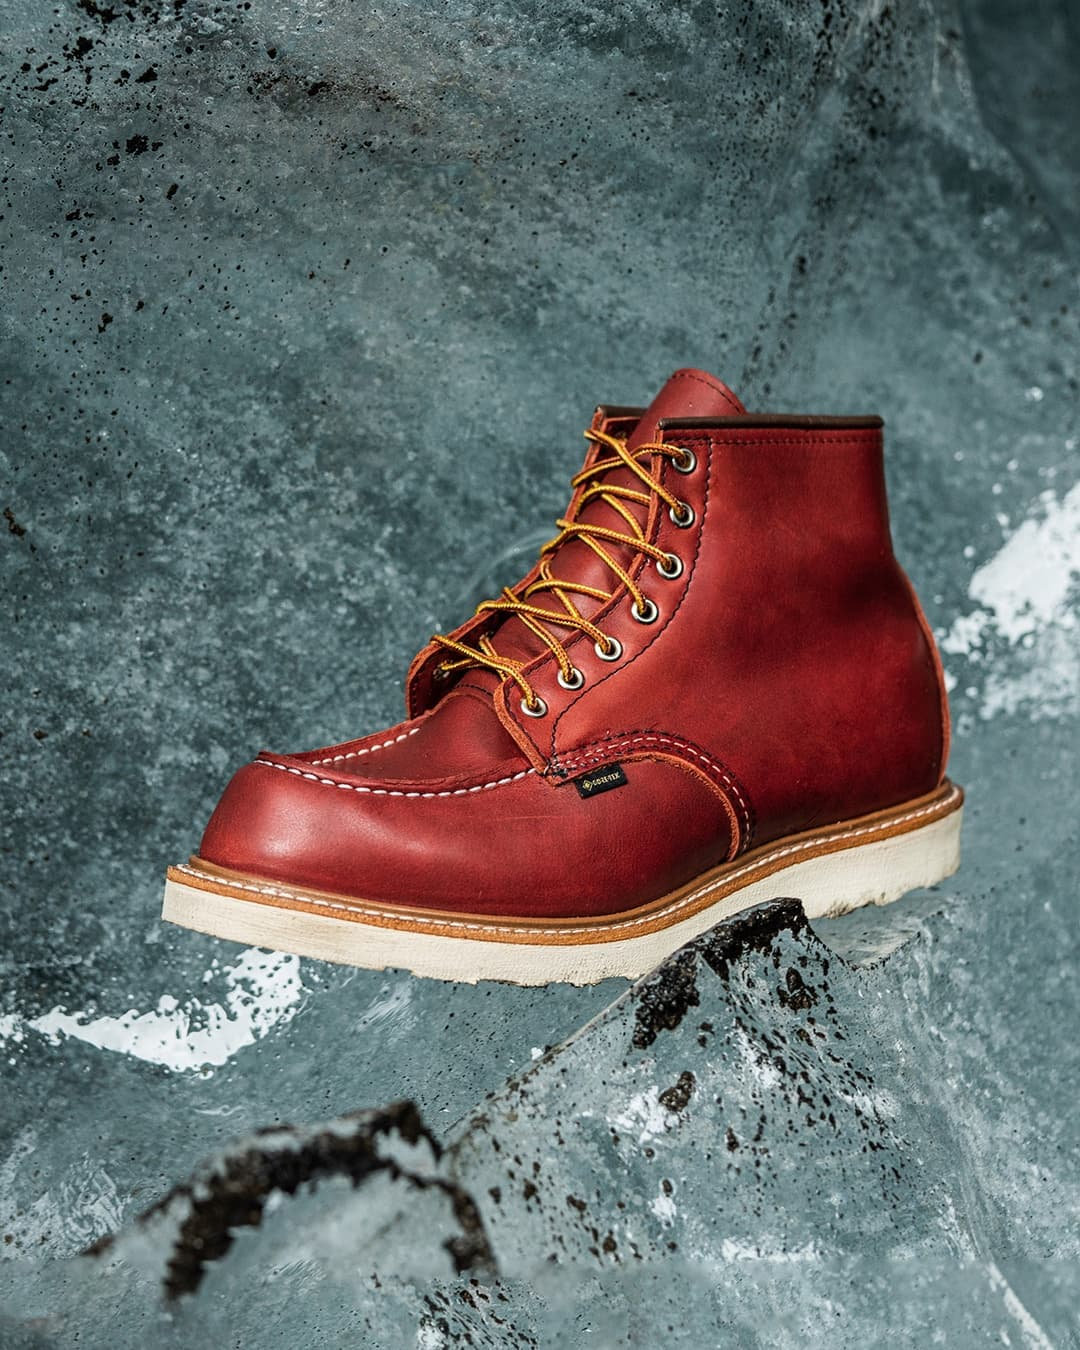 RED WING 推出的秋冬全新鞋型有点帅了，值友们有种草的吗？